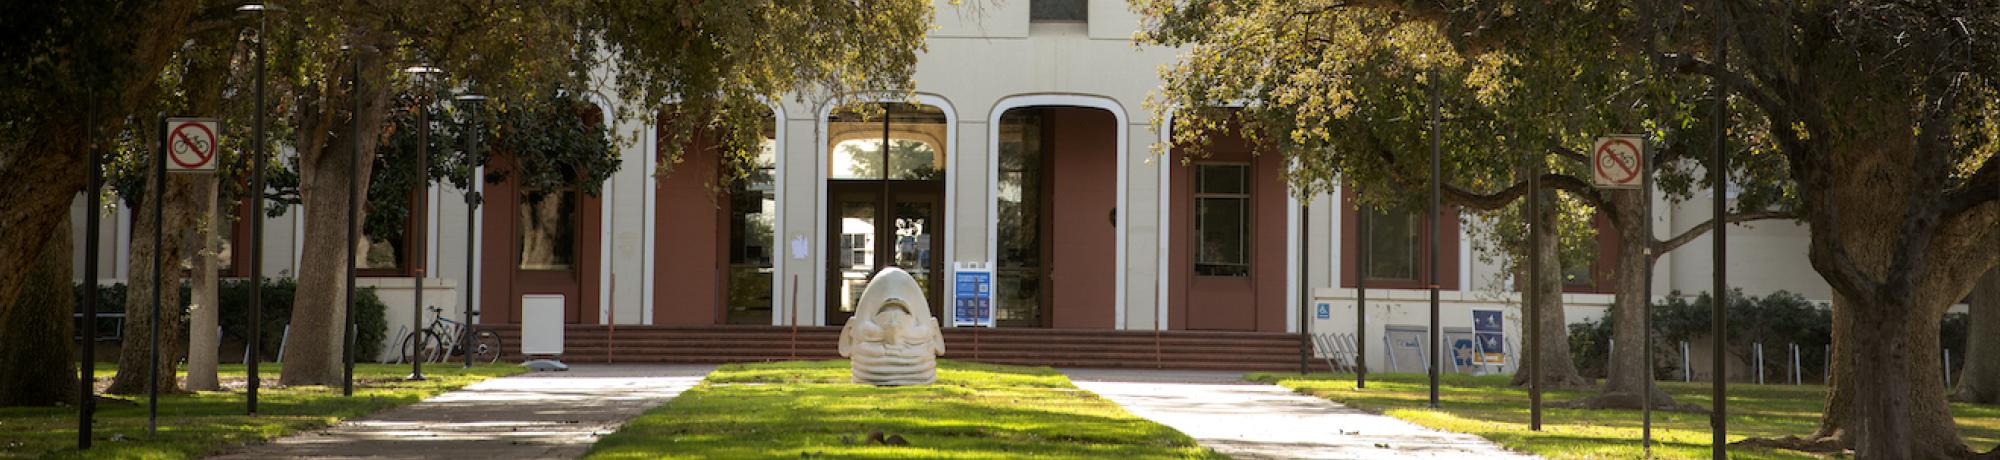 Mrak Hall and Egghead sculpture at UC Davis